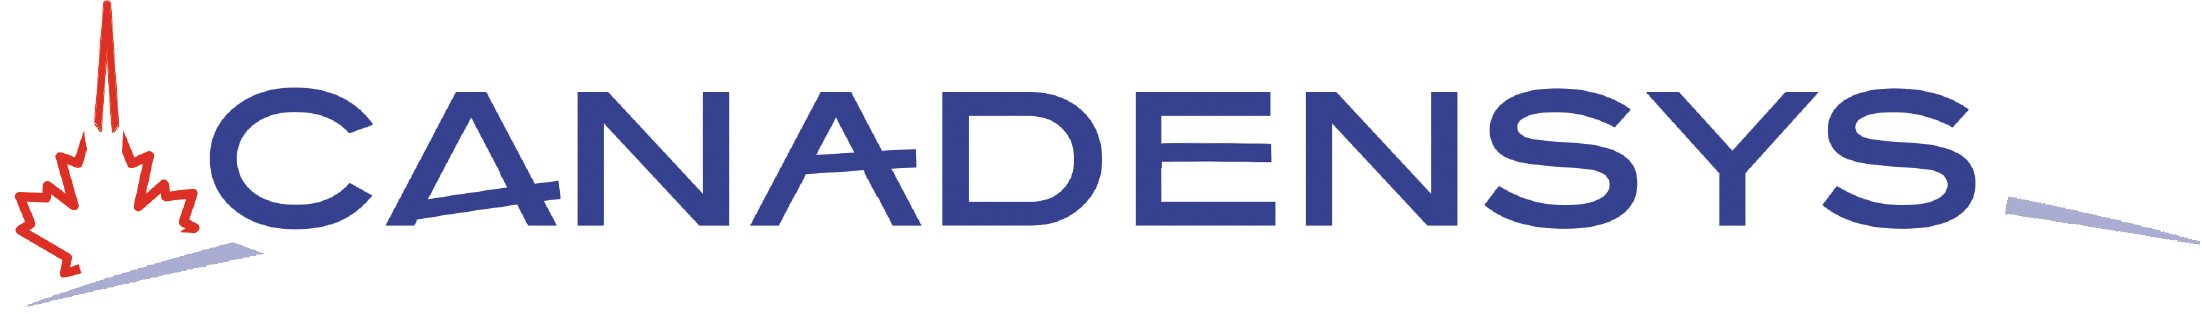 Canadensys-Logo.jpg